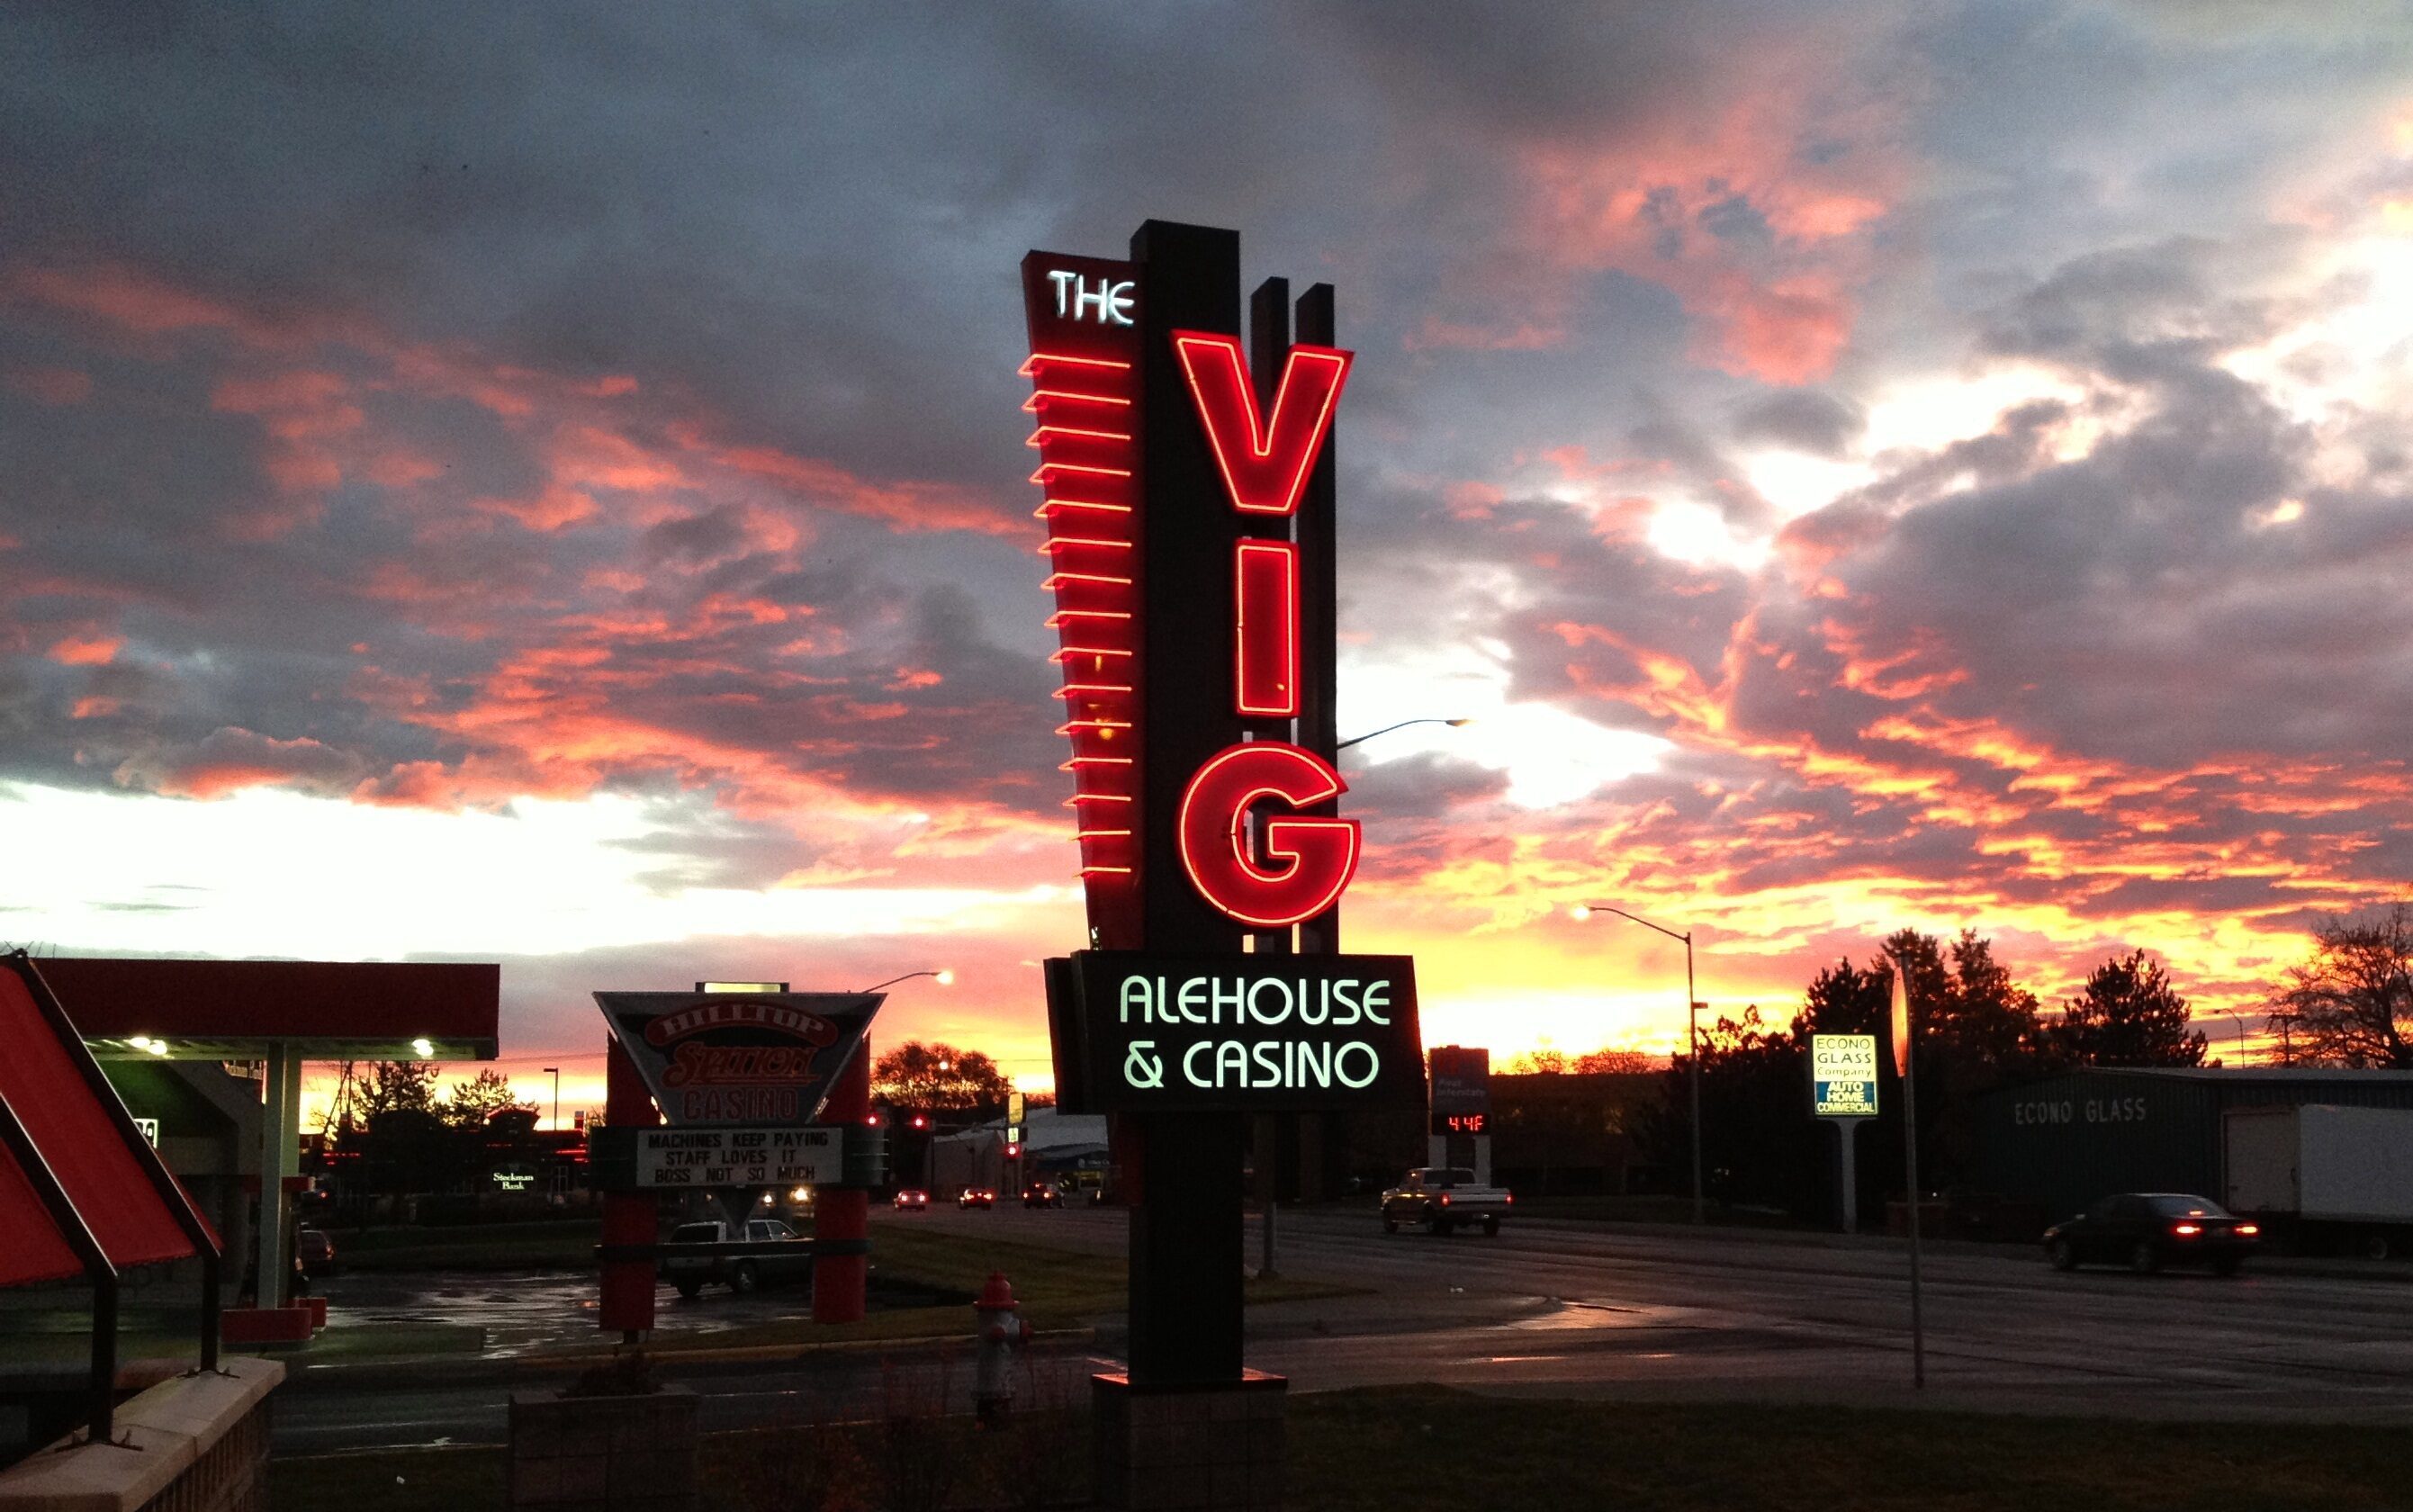 The Vig Alehouse & Casino